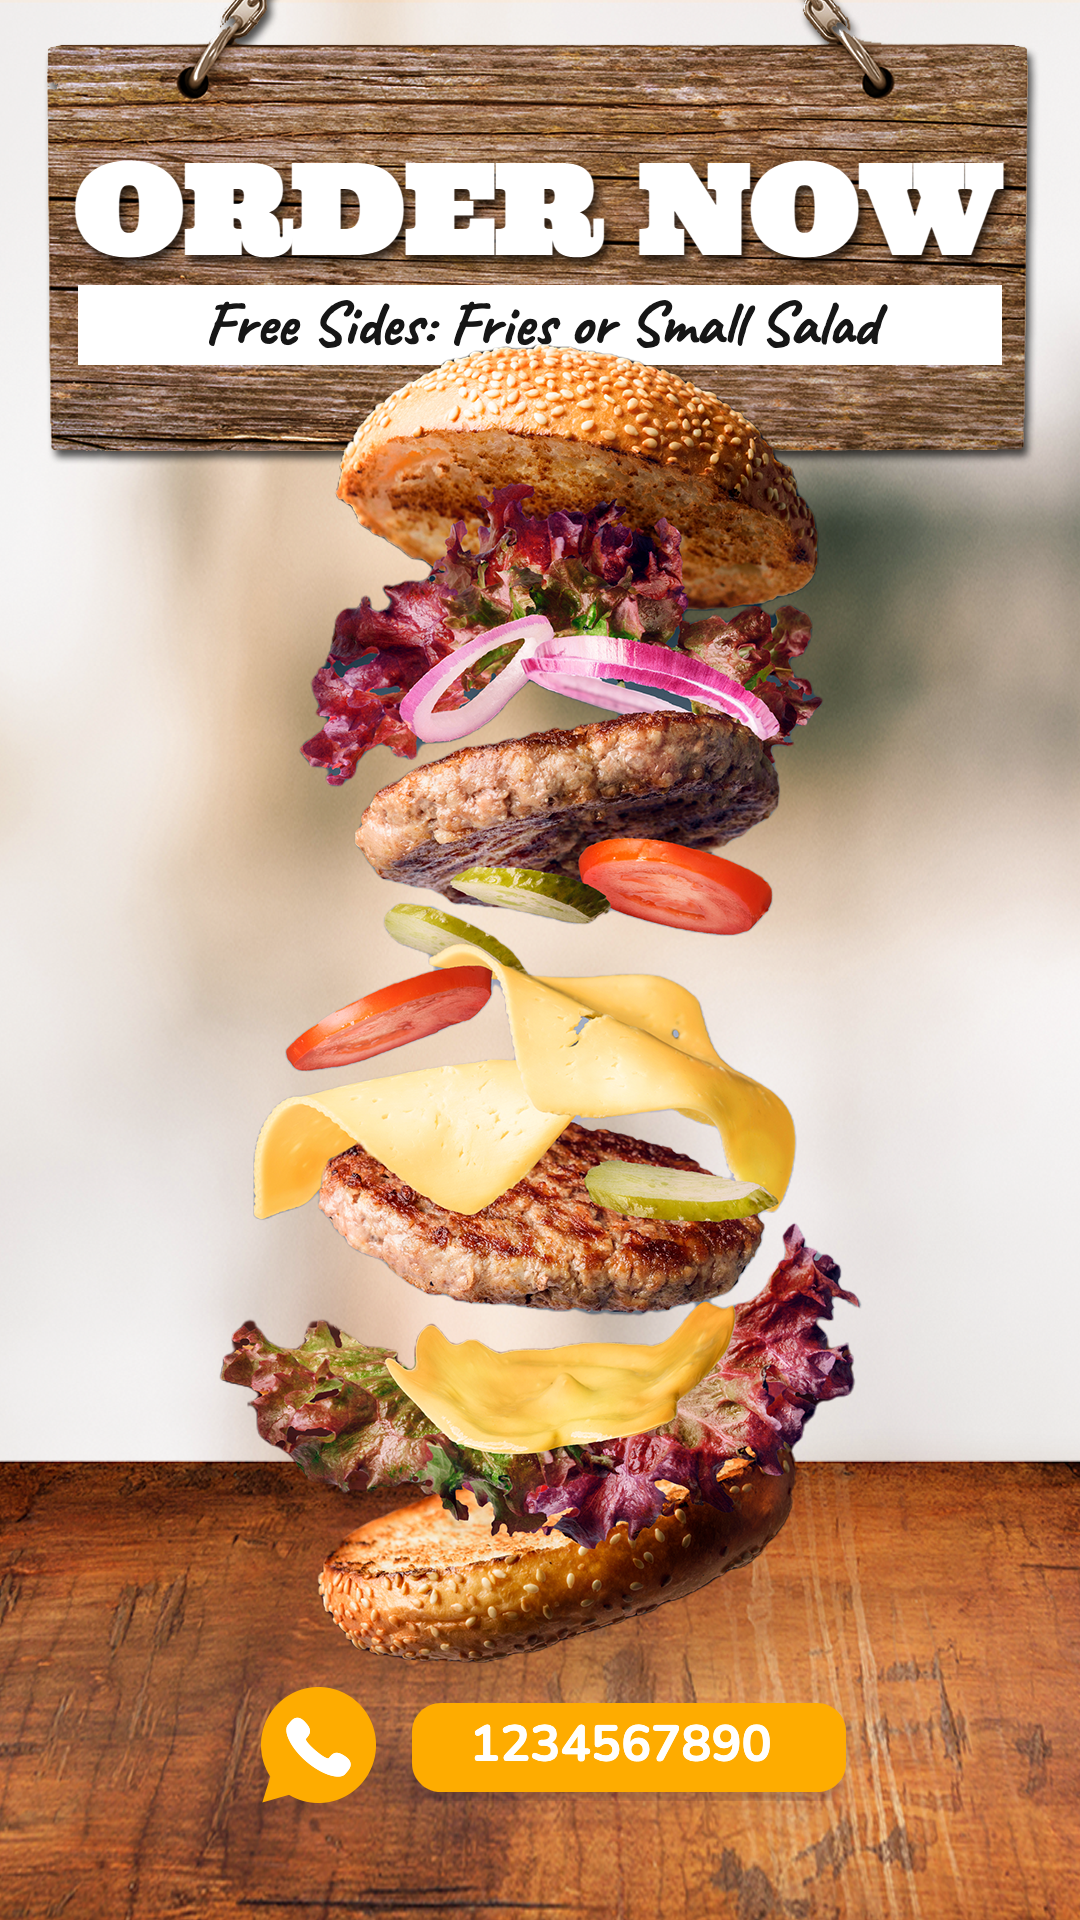 Burger & Fries Promotion iPhone Cutout Ecommerce Story预览效果